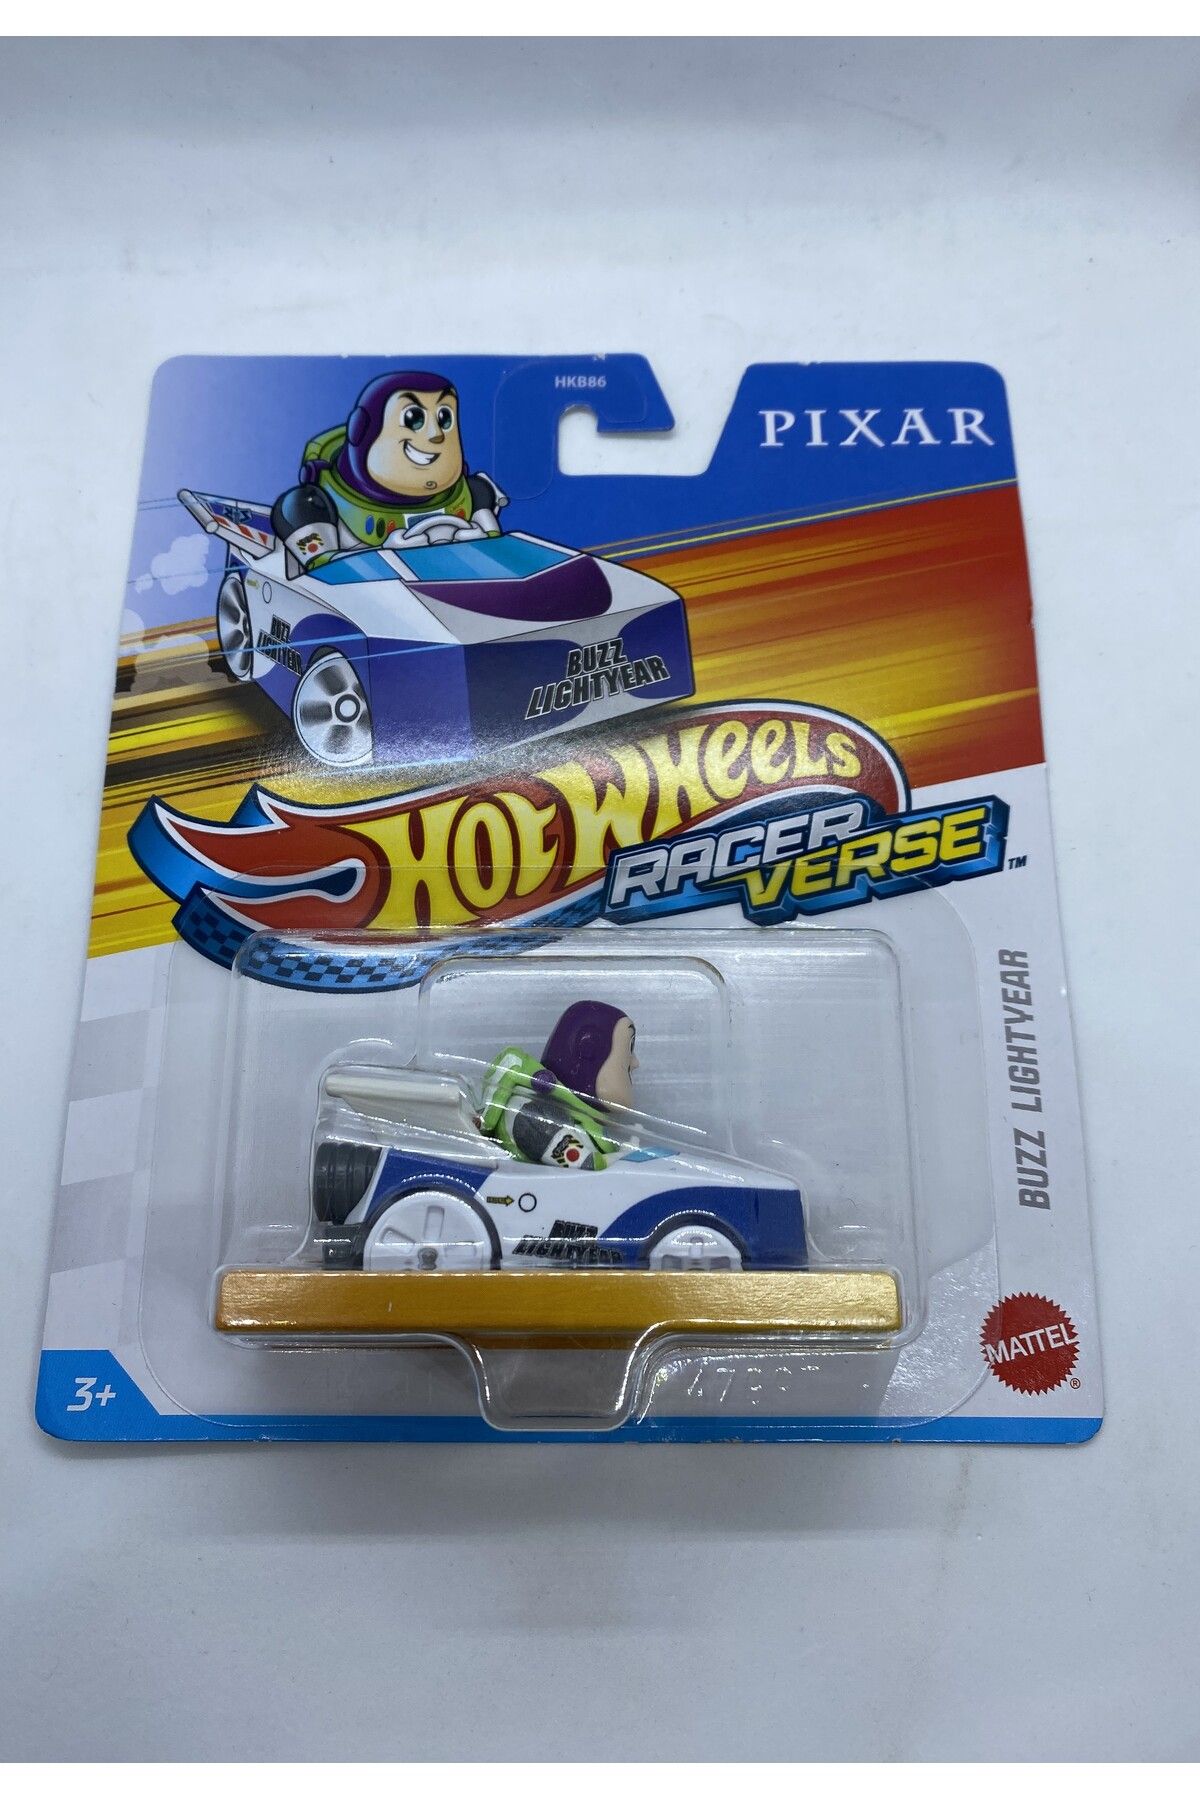 HOT WHEELS Racer Verse Buzz Lightyear *Toy Story Pixar